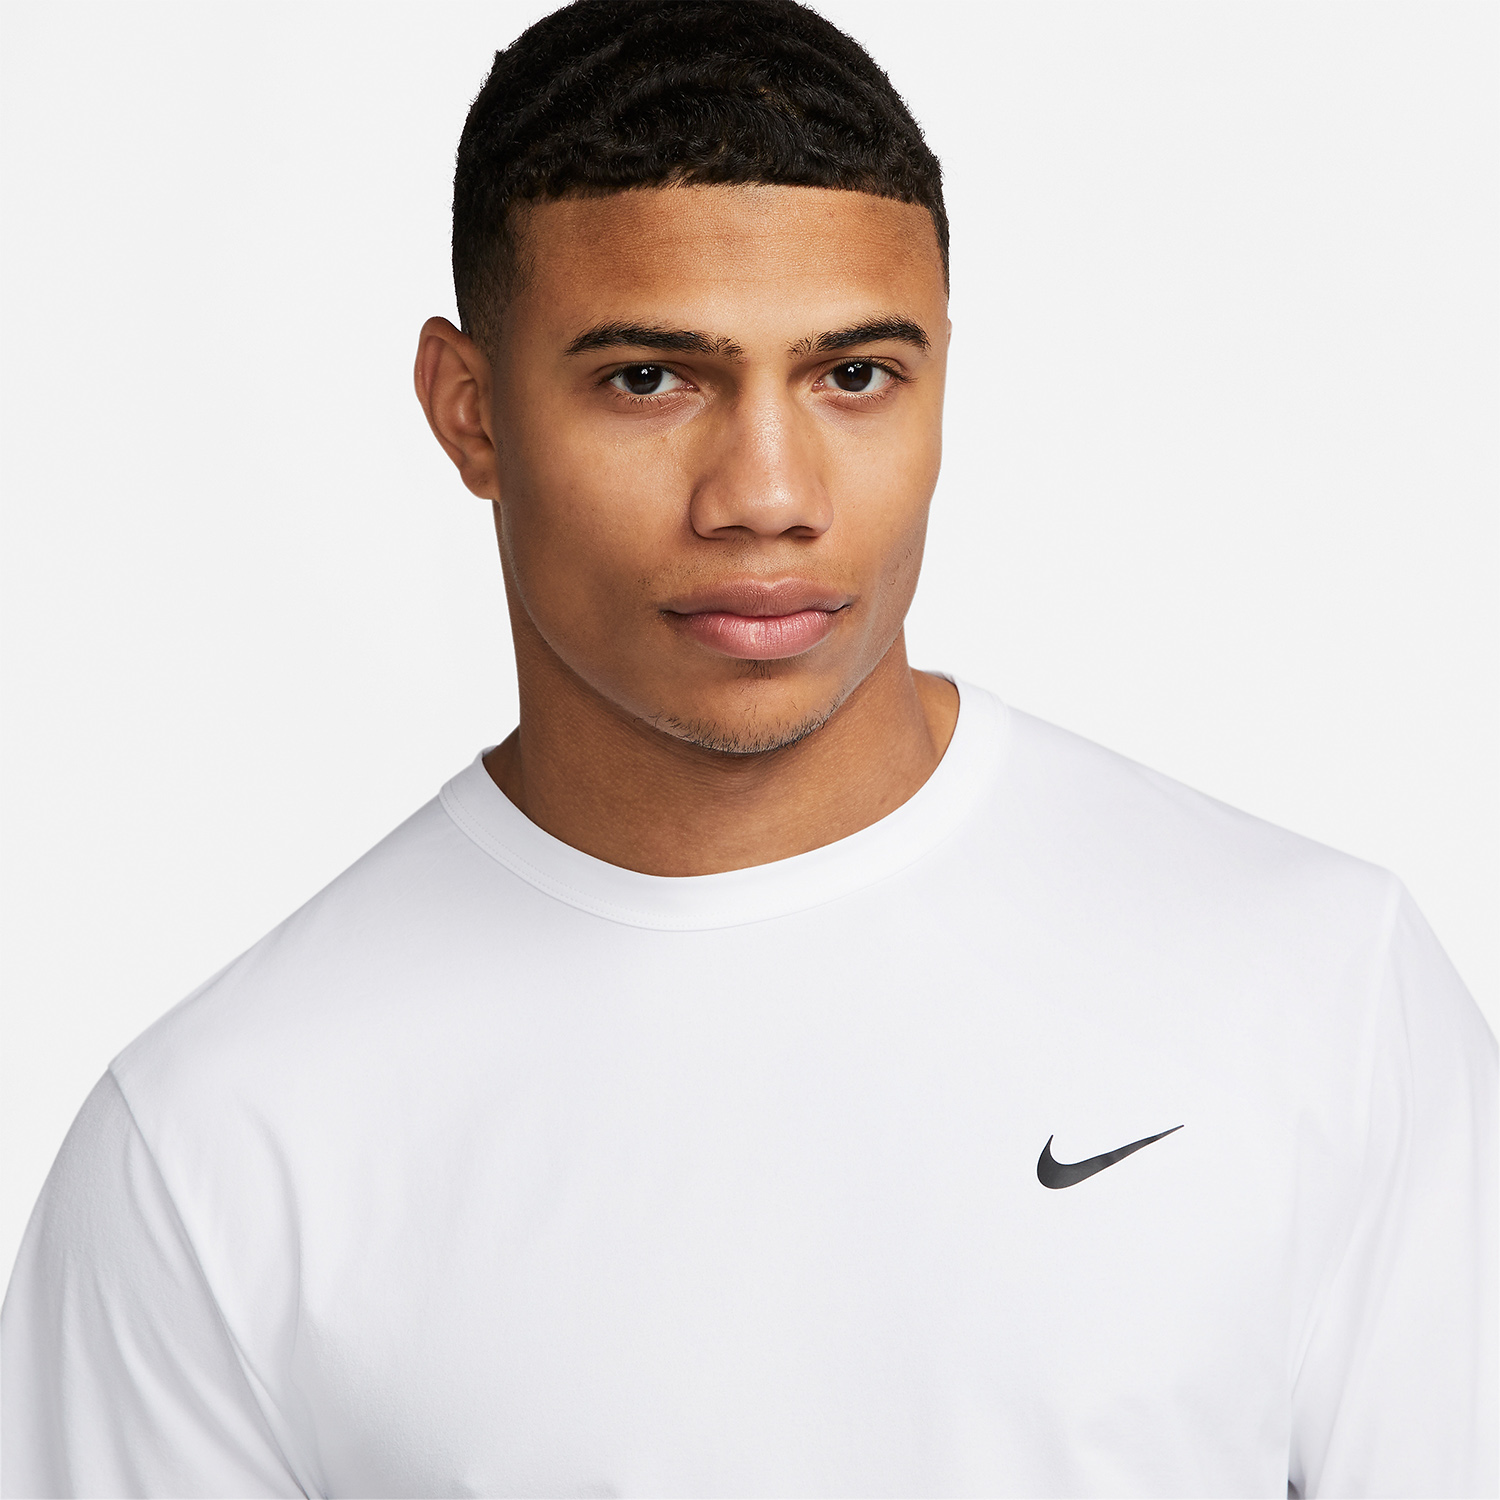 Nike Dri-FIT Hyverse T-Shirt - White/Black